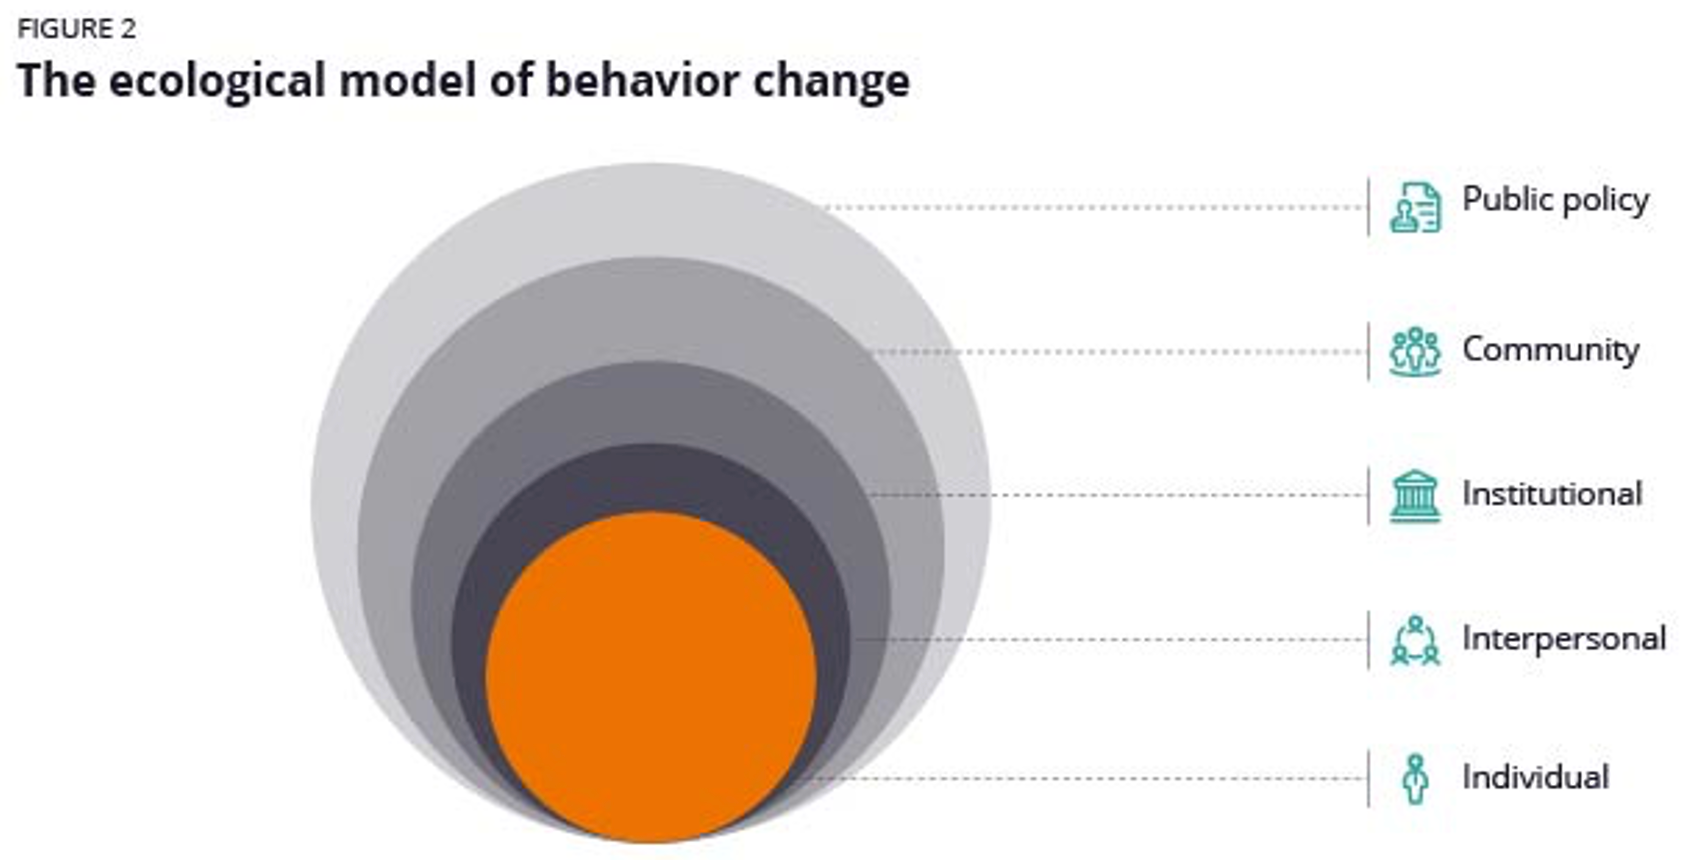 FIGURE 2: The ecological model of behavior change